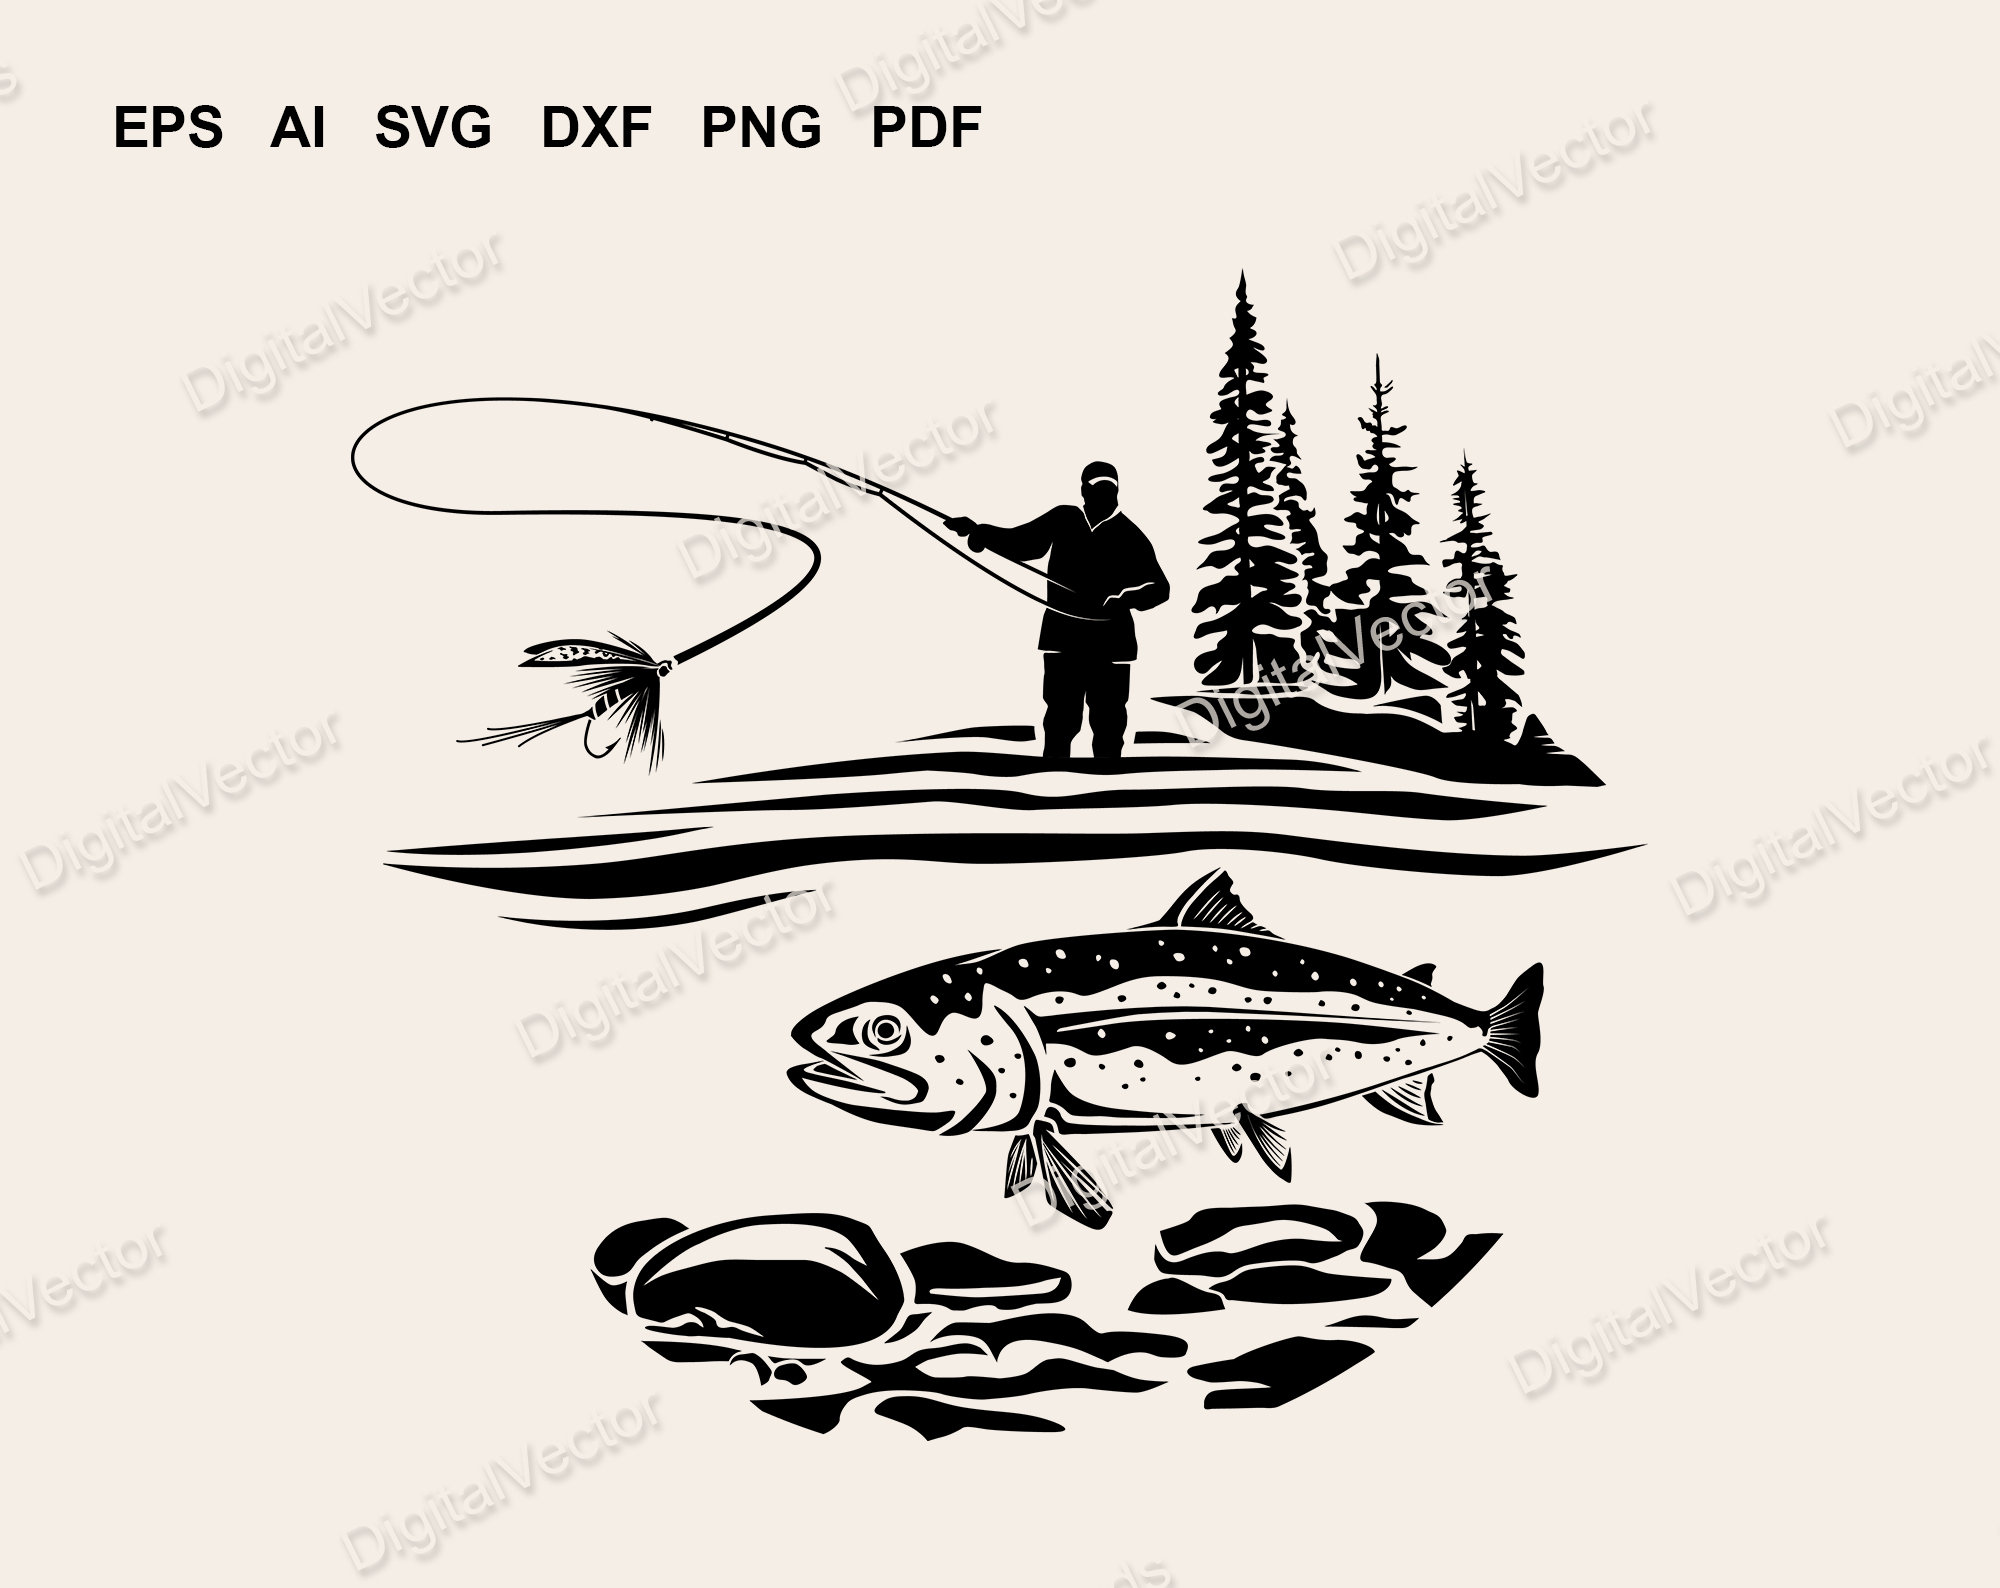 The Fish Whisperer T-Shirt Fishing SVG  creative design maker –  Creativedesignmaker